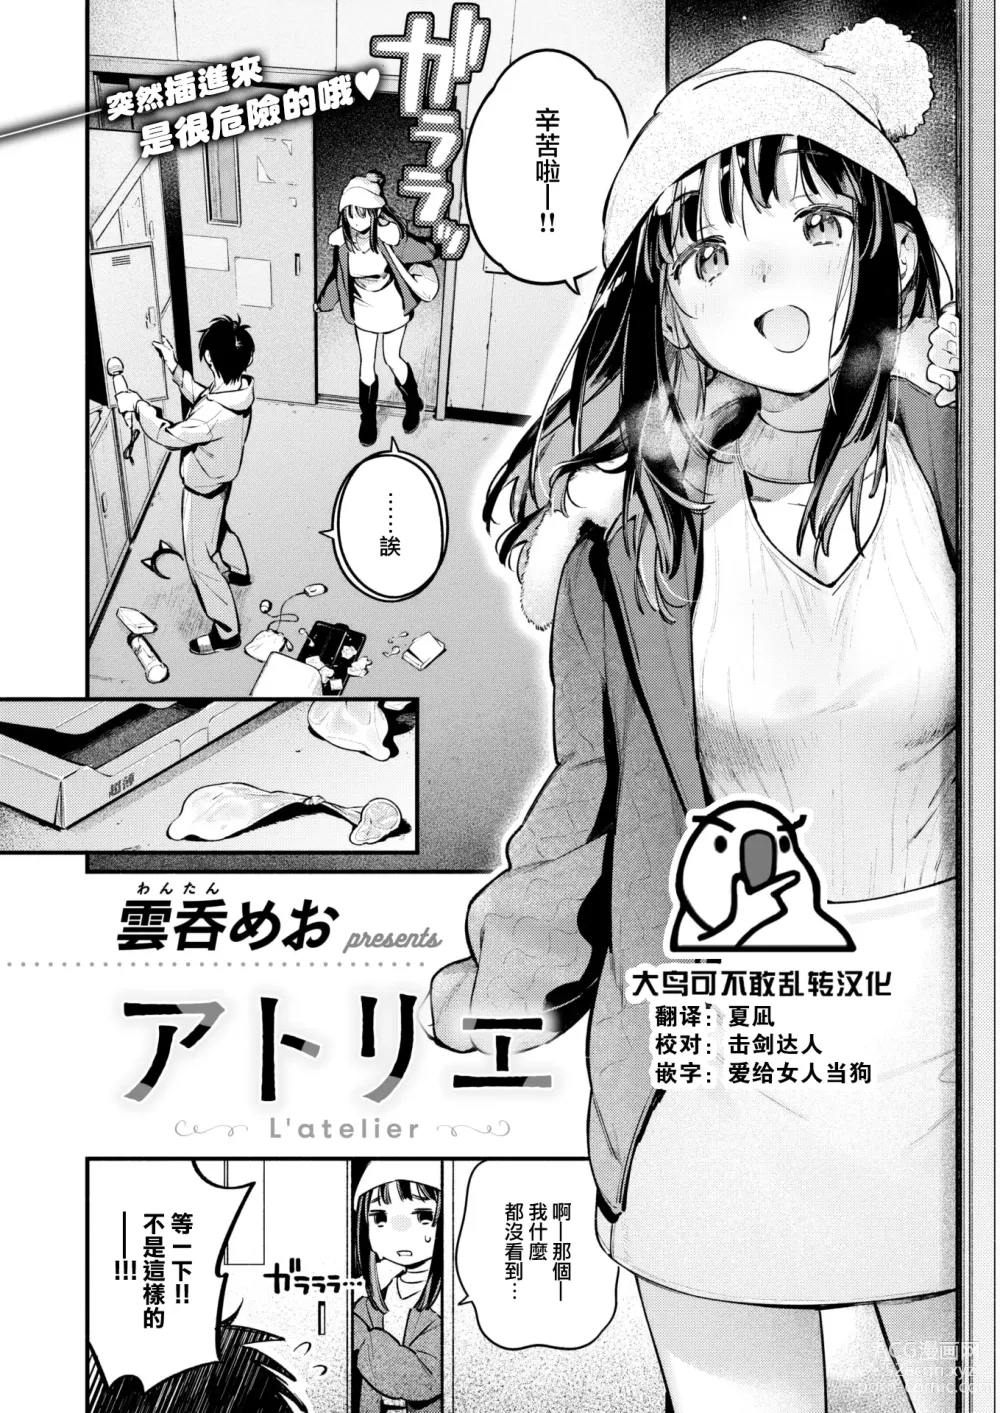 Page 1 of manga Atelier